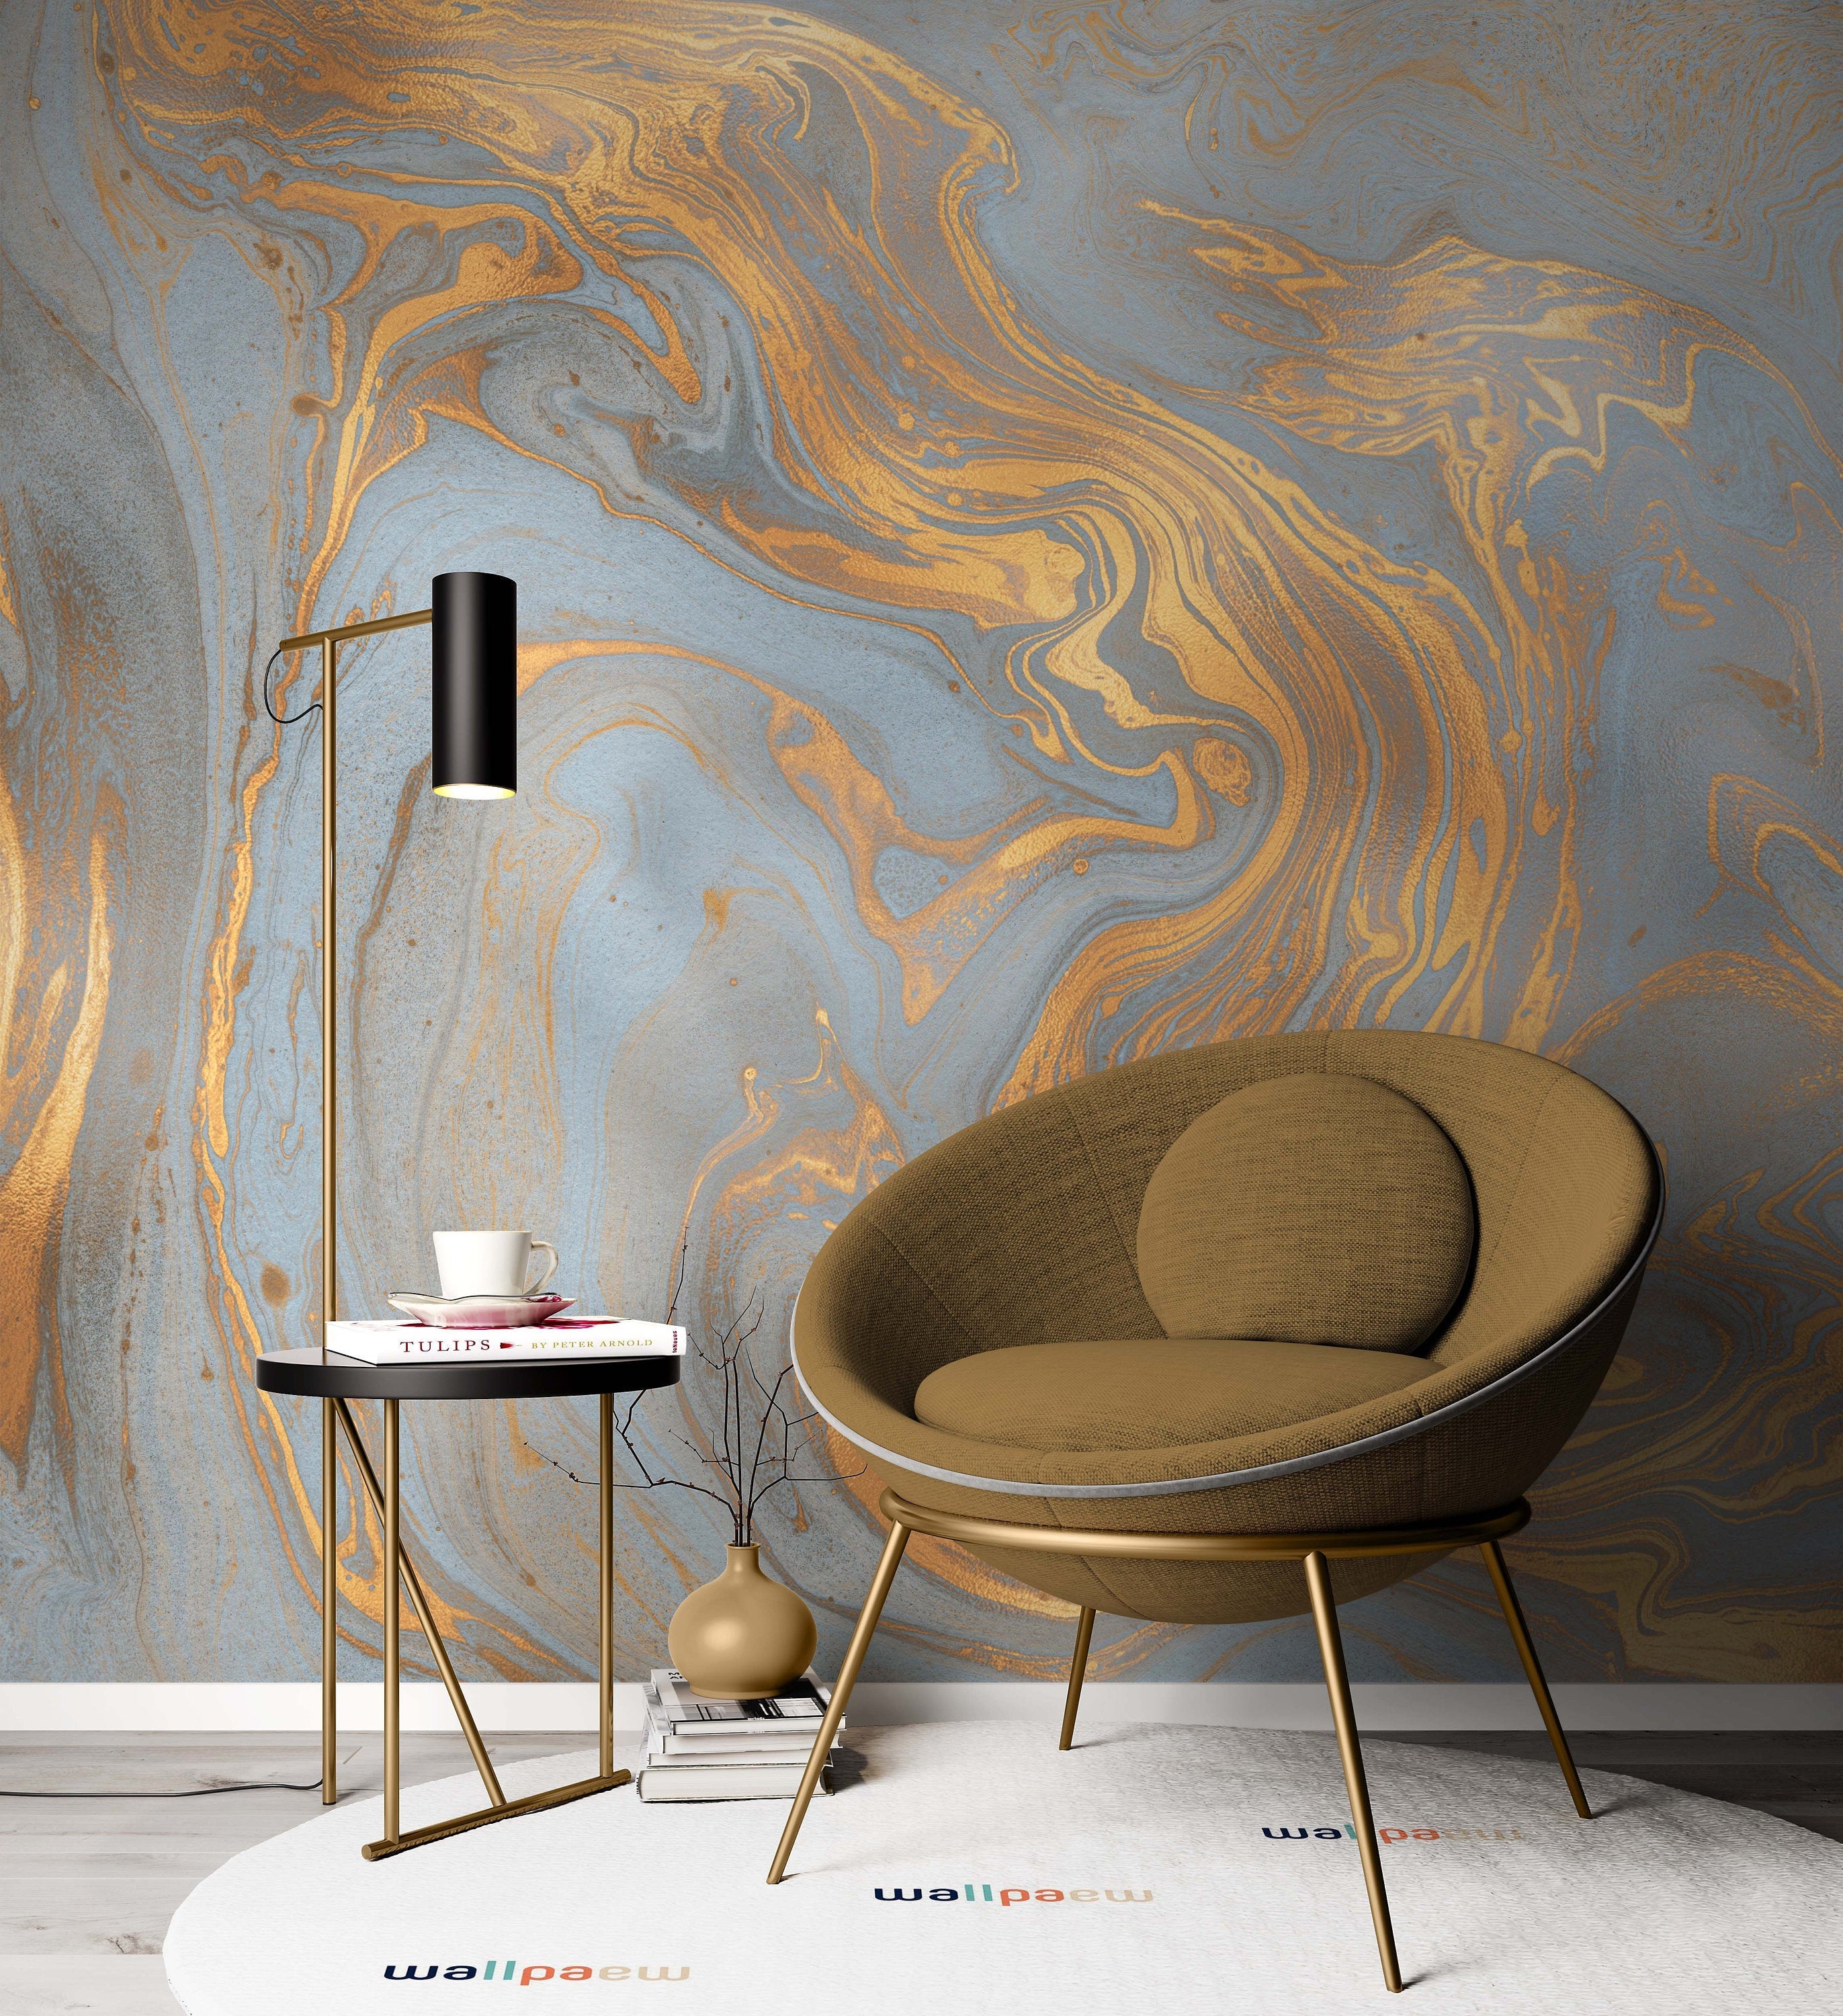 Background Creative Design Marble Texture Wallpaper Bathroom Restaurant Bedroom Living Room Cafe Office Mural Home Decor Wall Art